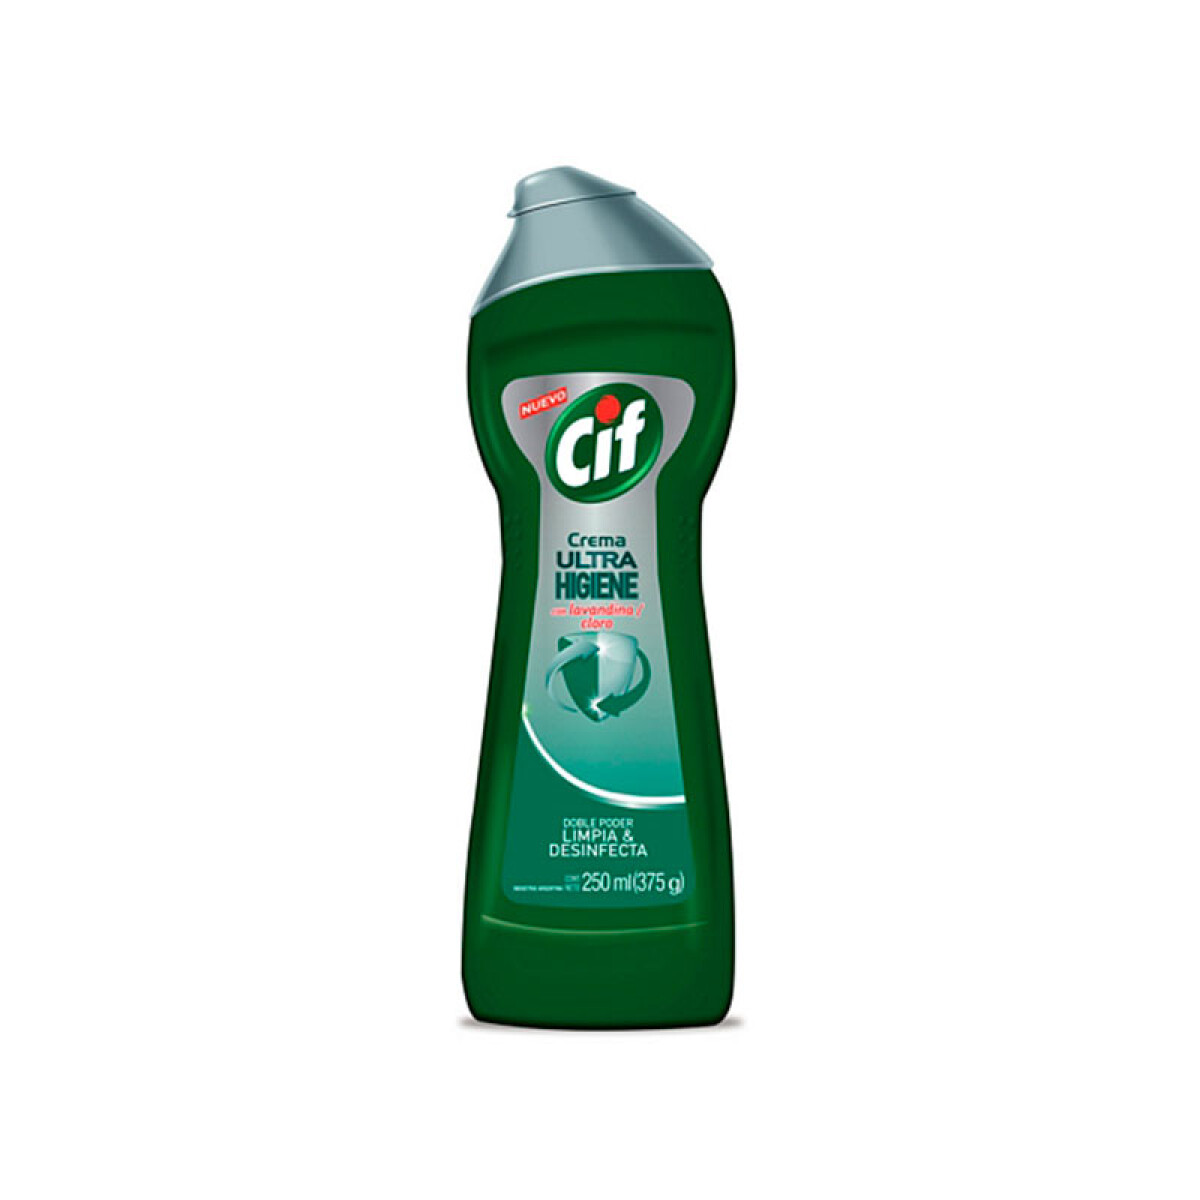 CIF crema 250ML 375grs - Ultra higiene 